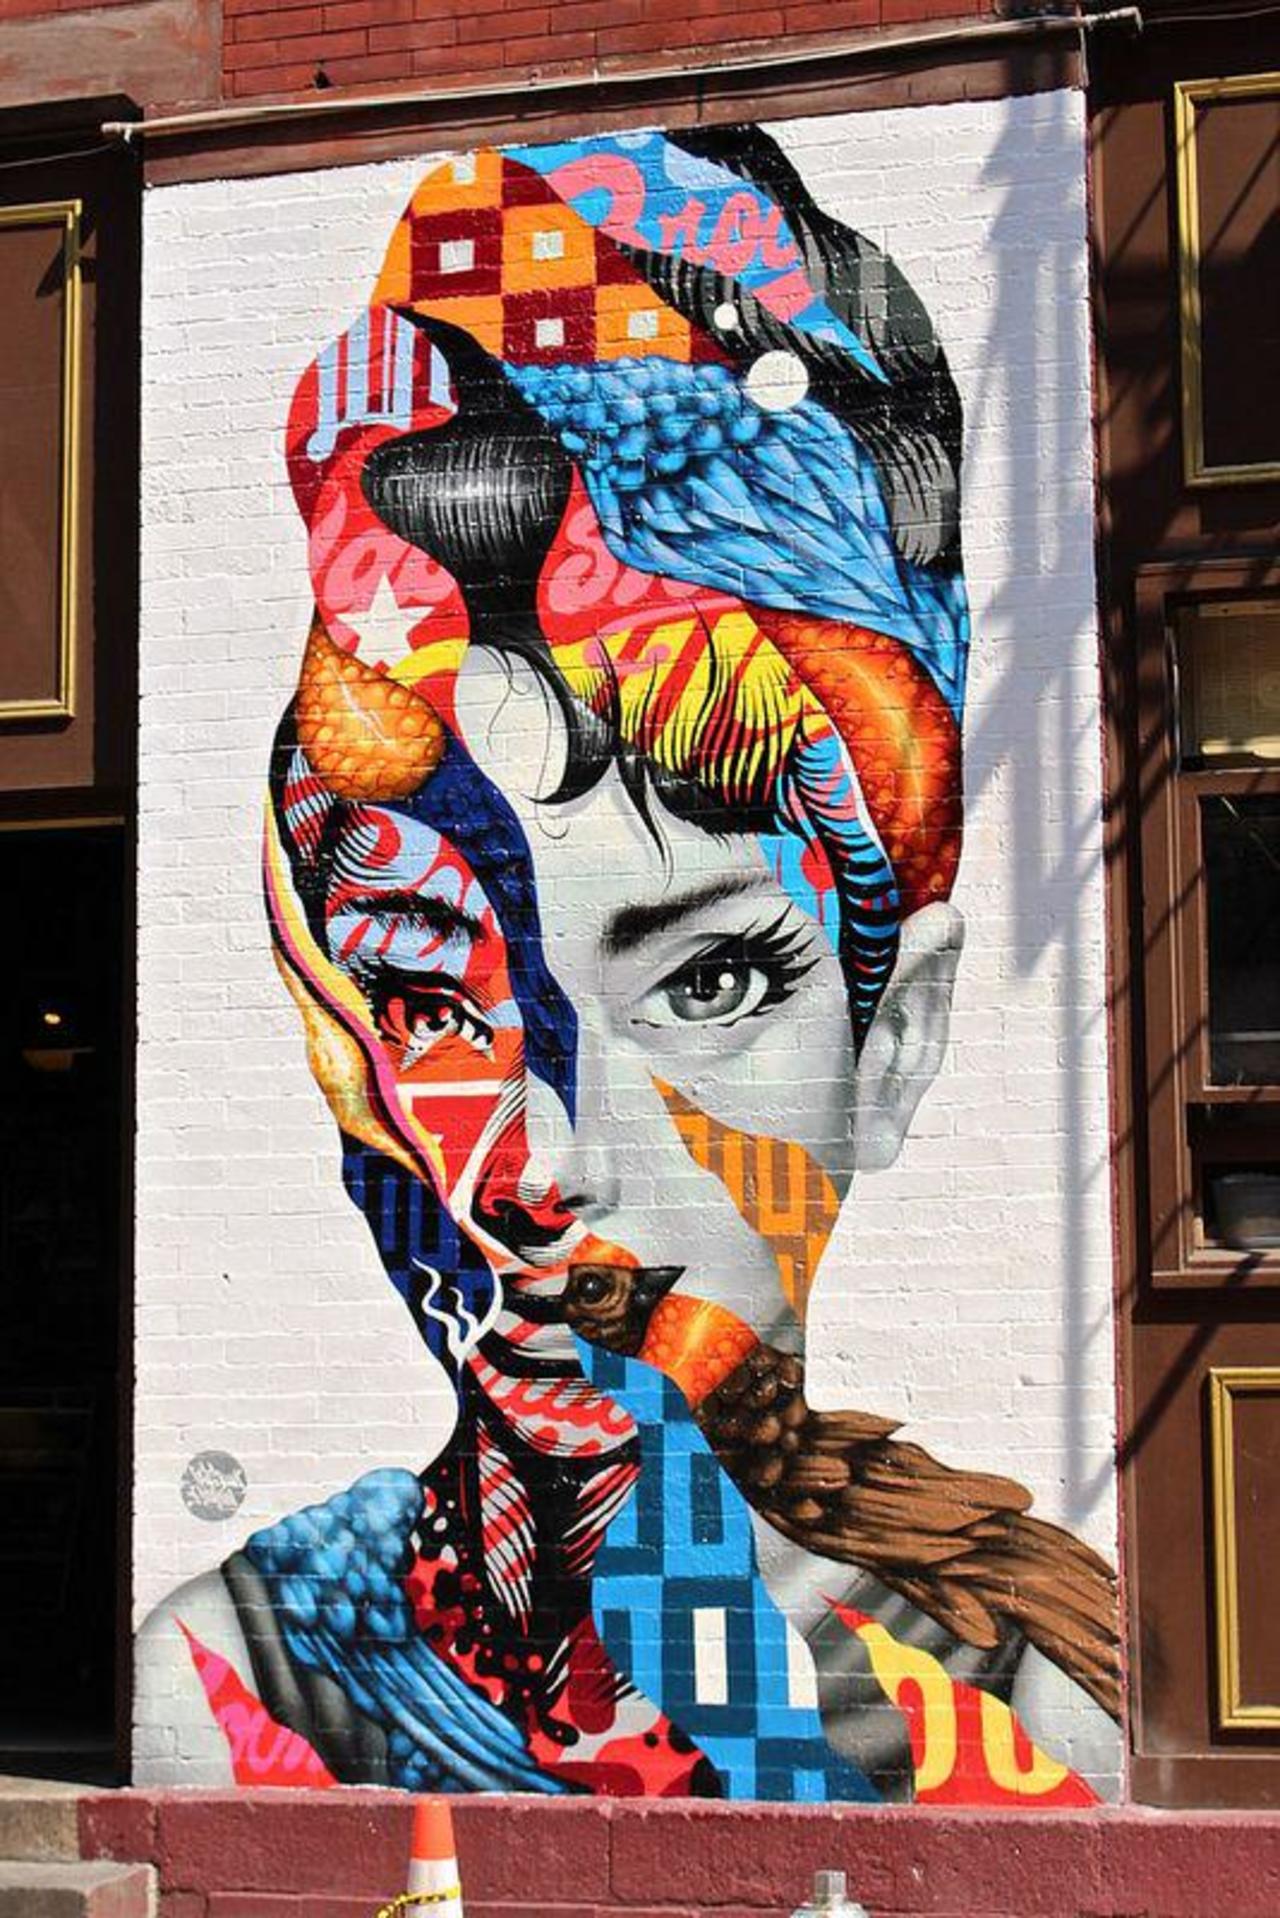 #AudreyHepburn #Graffiti in #LittleItaly - #NewYorkCity
#streetart #hepburn #art #artwork #nyc #newyork #classic http://t.co/kqhQGXP9Cf